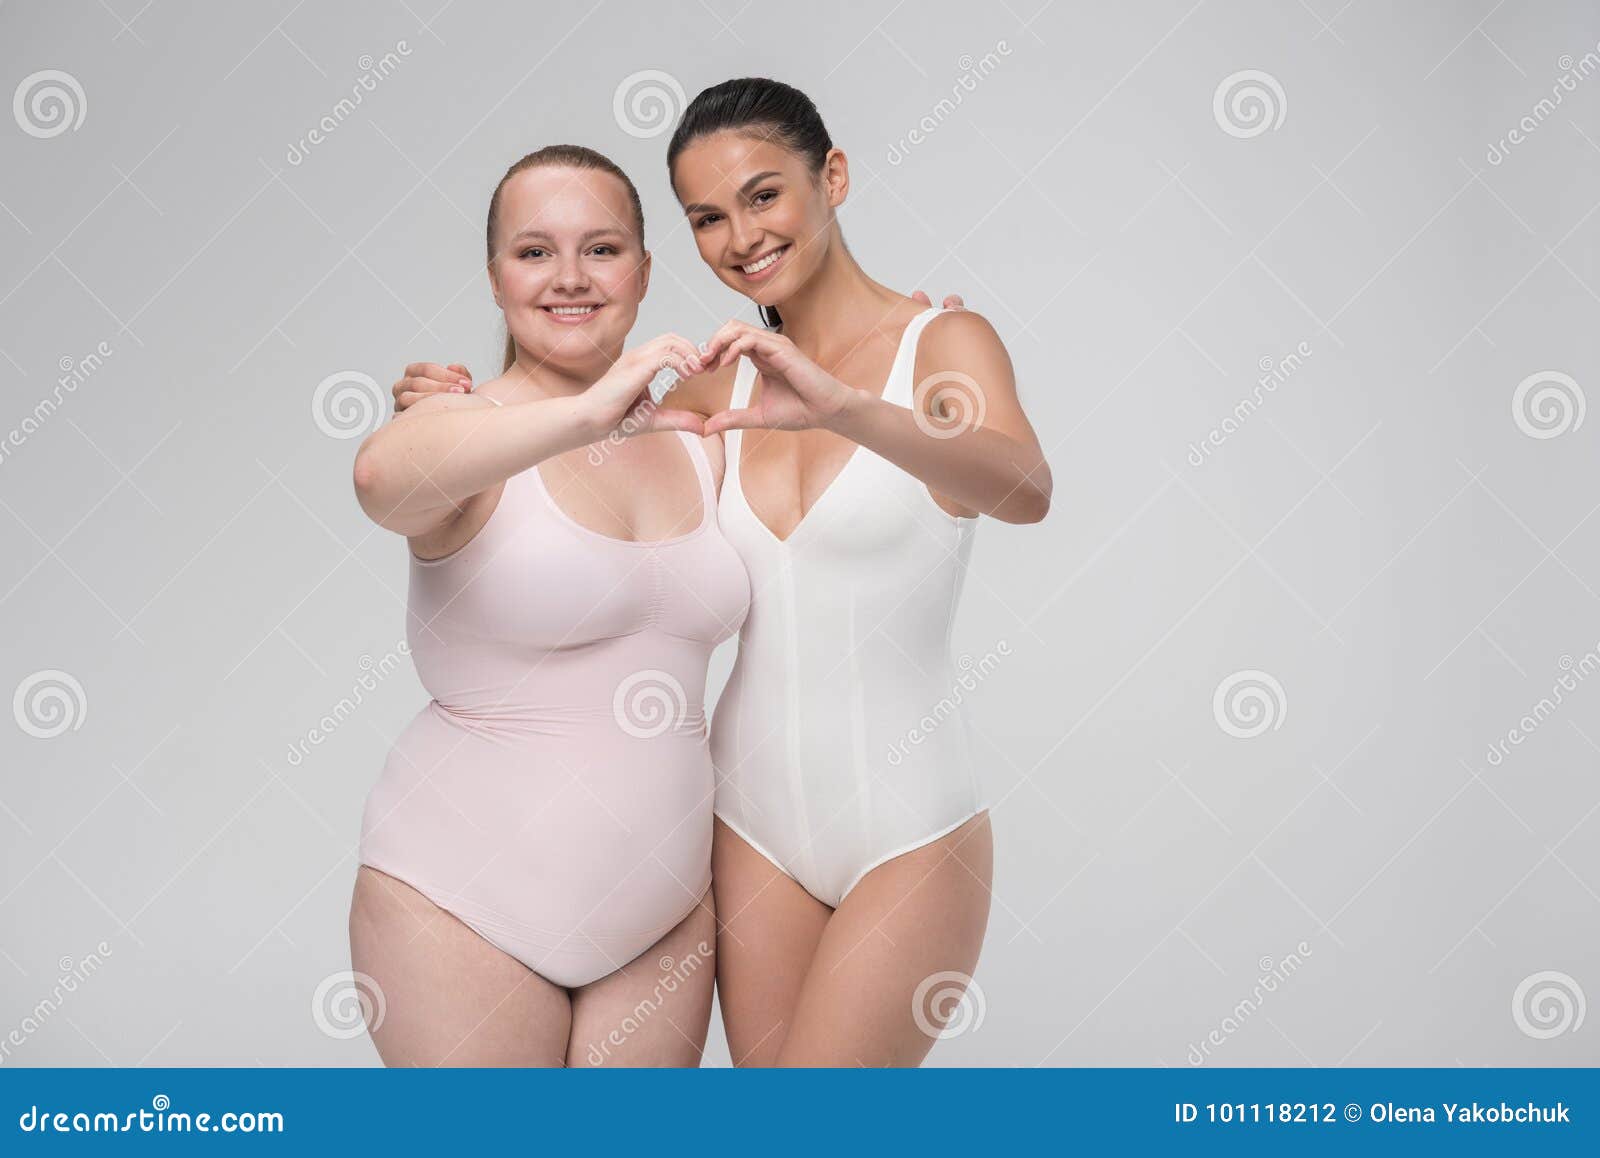 Chubby and thin lesbian